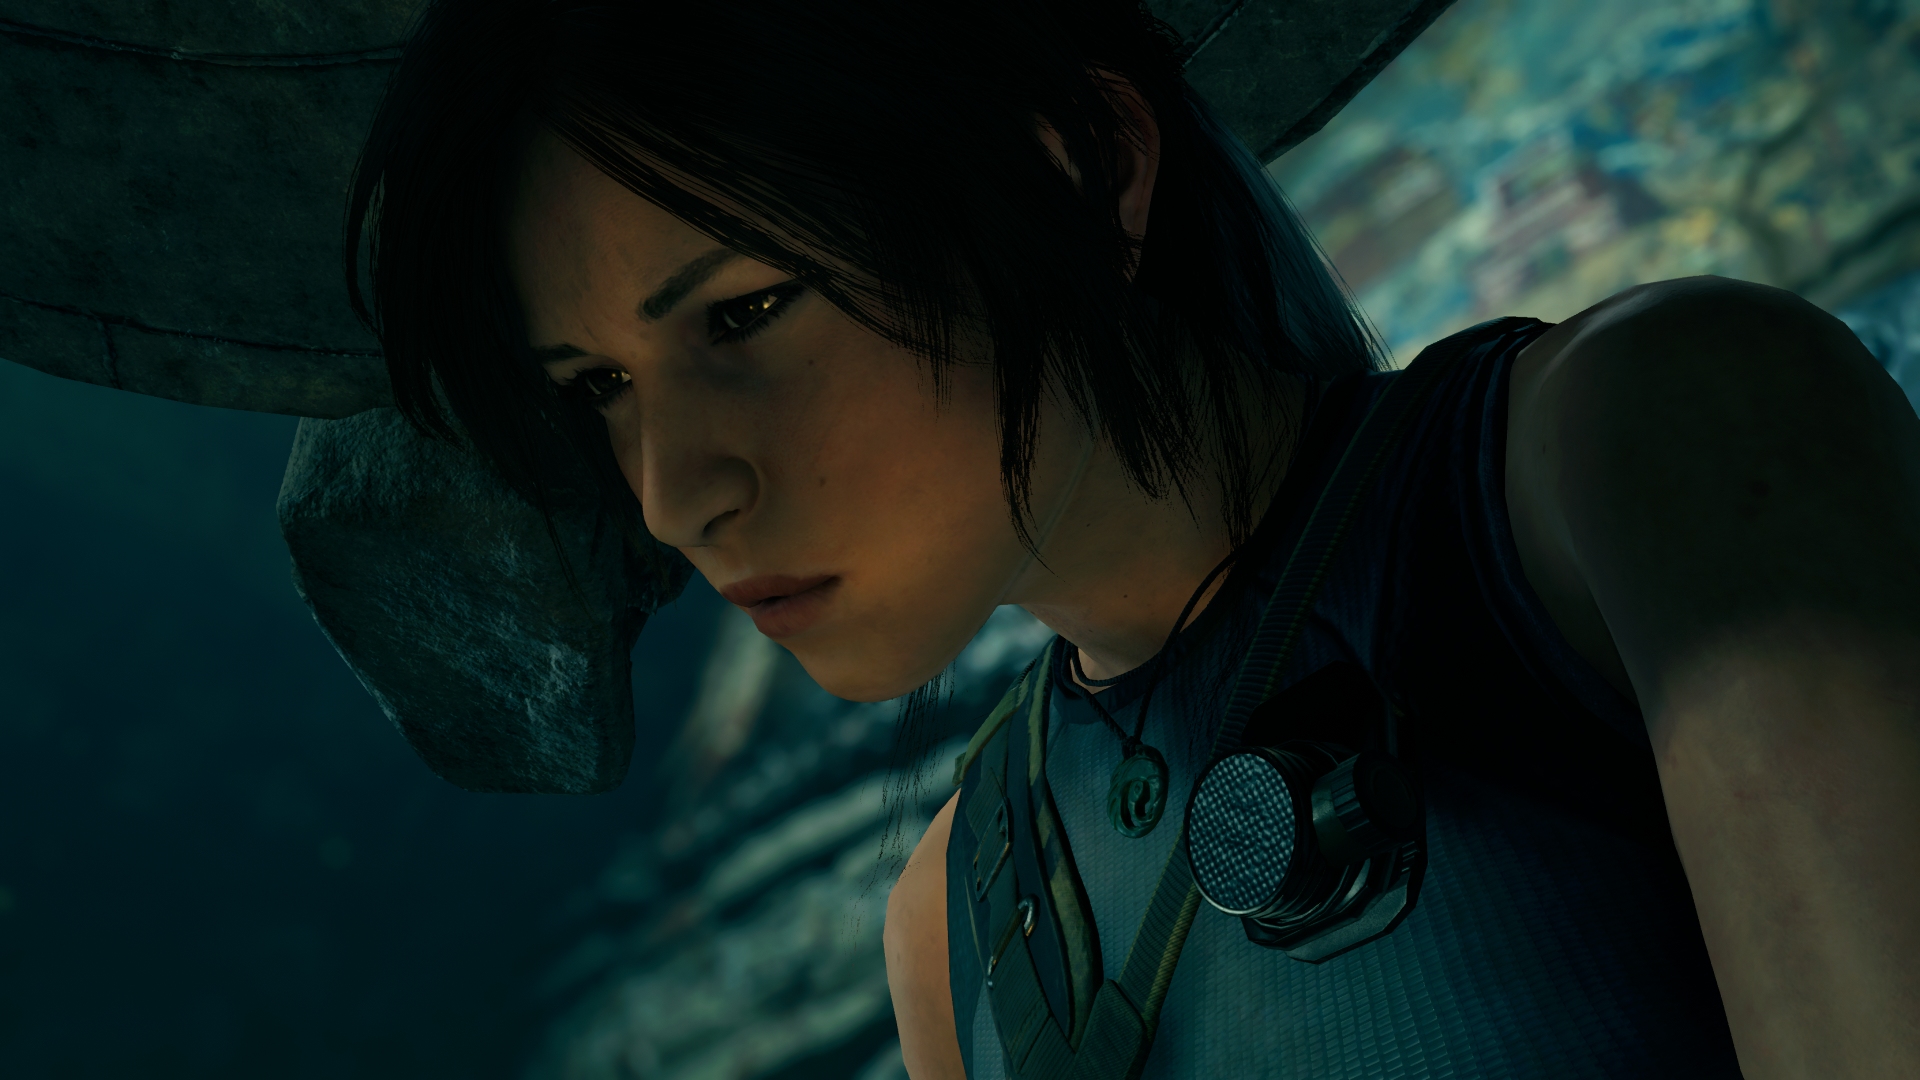 Android female protagonist games. Игрофильм Shadow of the Tomb Raider. Шадоу томб Райдер прохождение Отзвуки прошлого.